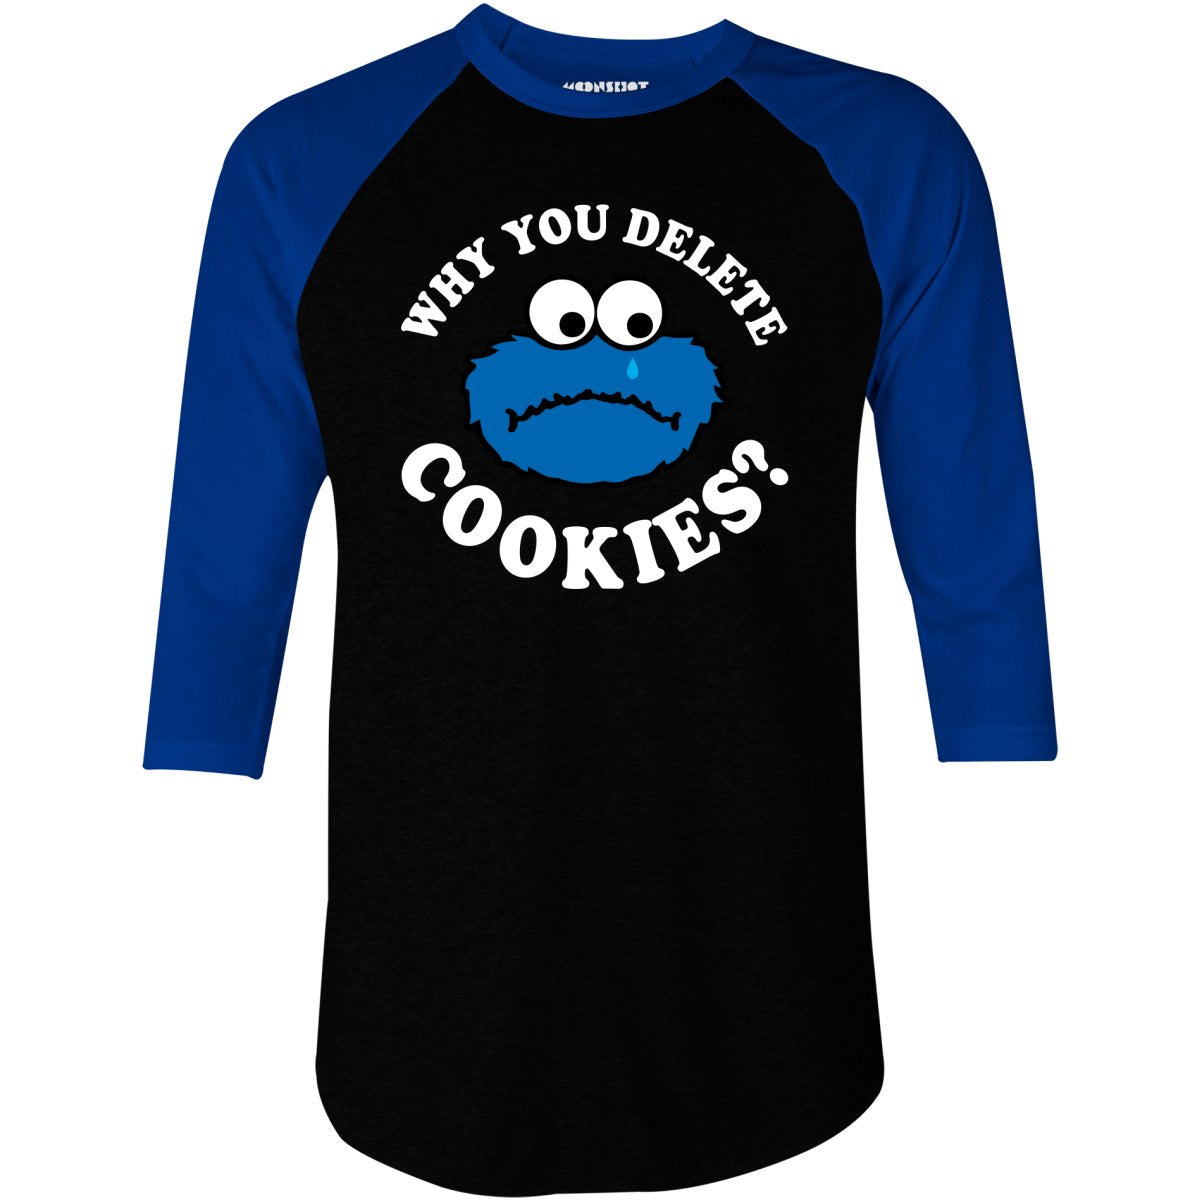 Why You Delete Cookies? - 3/4 Sleeve Raglan T-Shirt